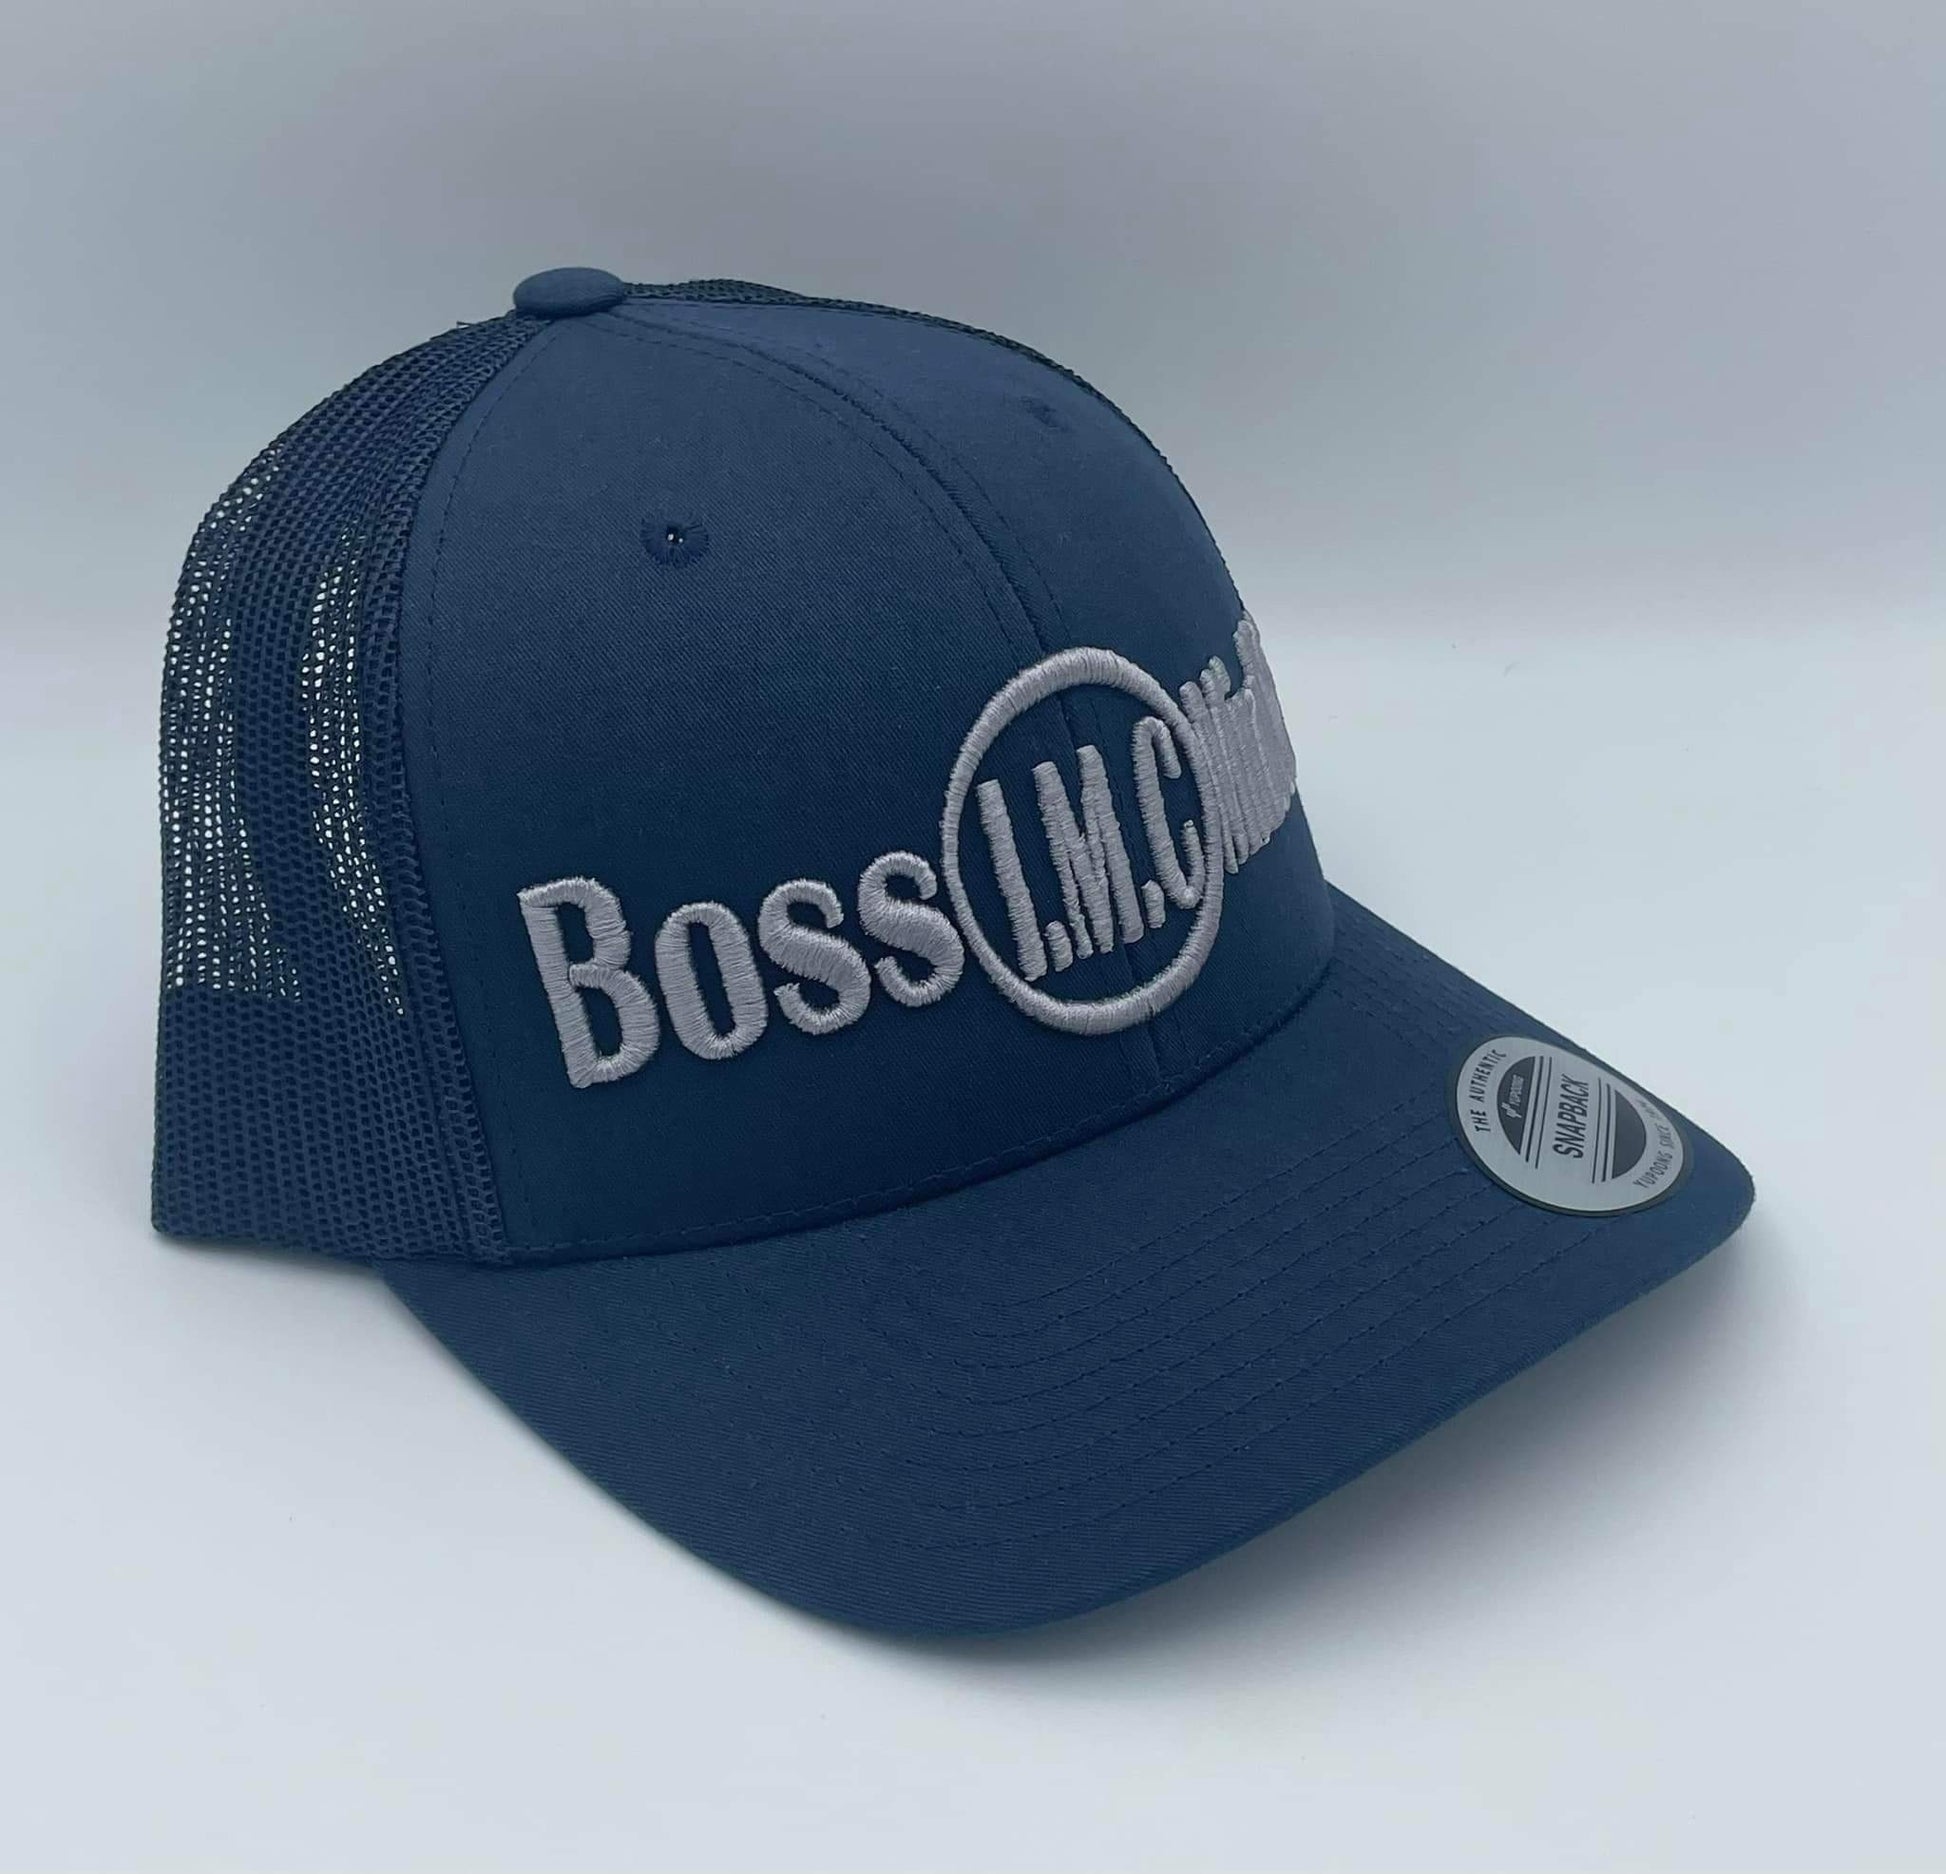 Navy blue BOSS Mindset hat